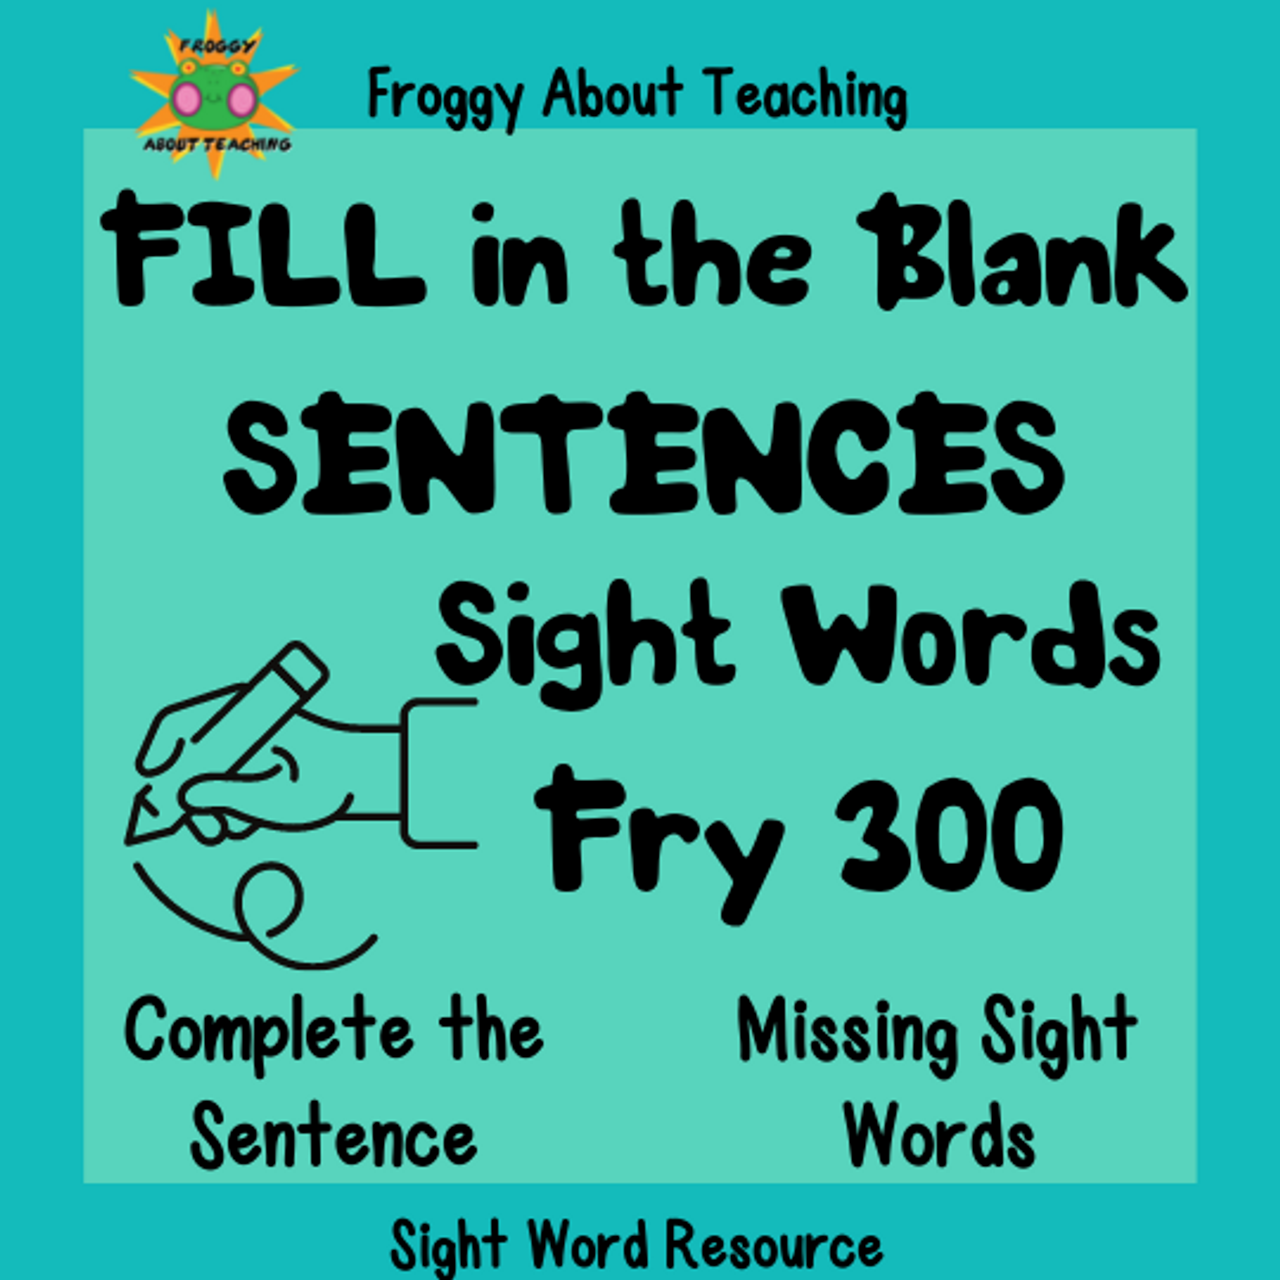 Fill in the Blank Sentences Fry 300